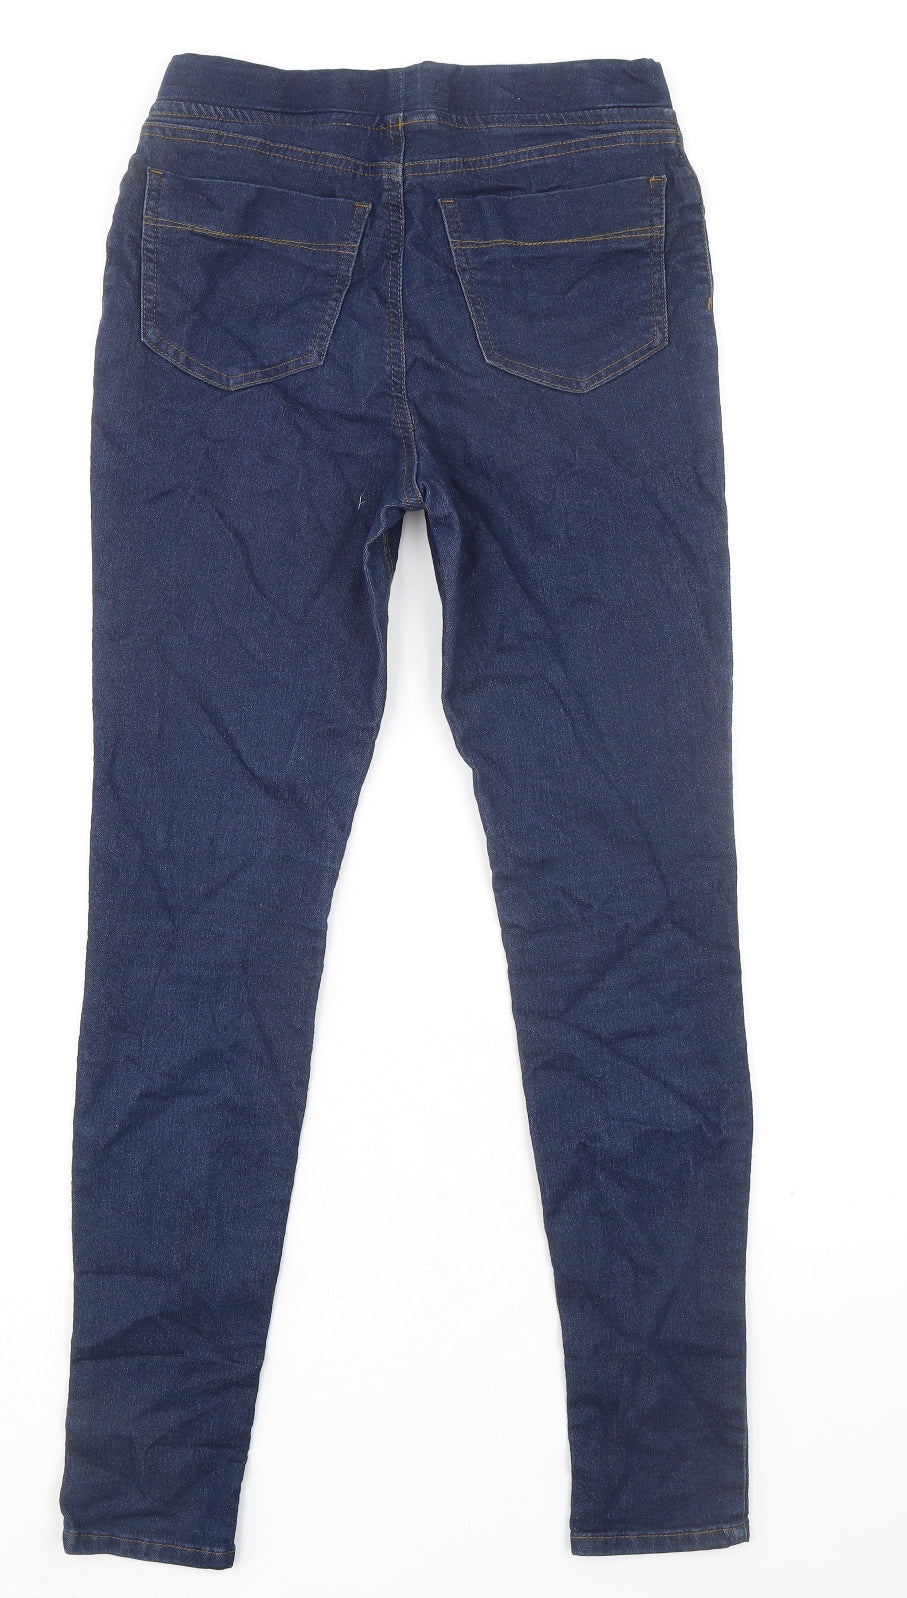 TU Womens Blue Cotton Jegging Jeans Size 8 L28 in Regular